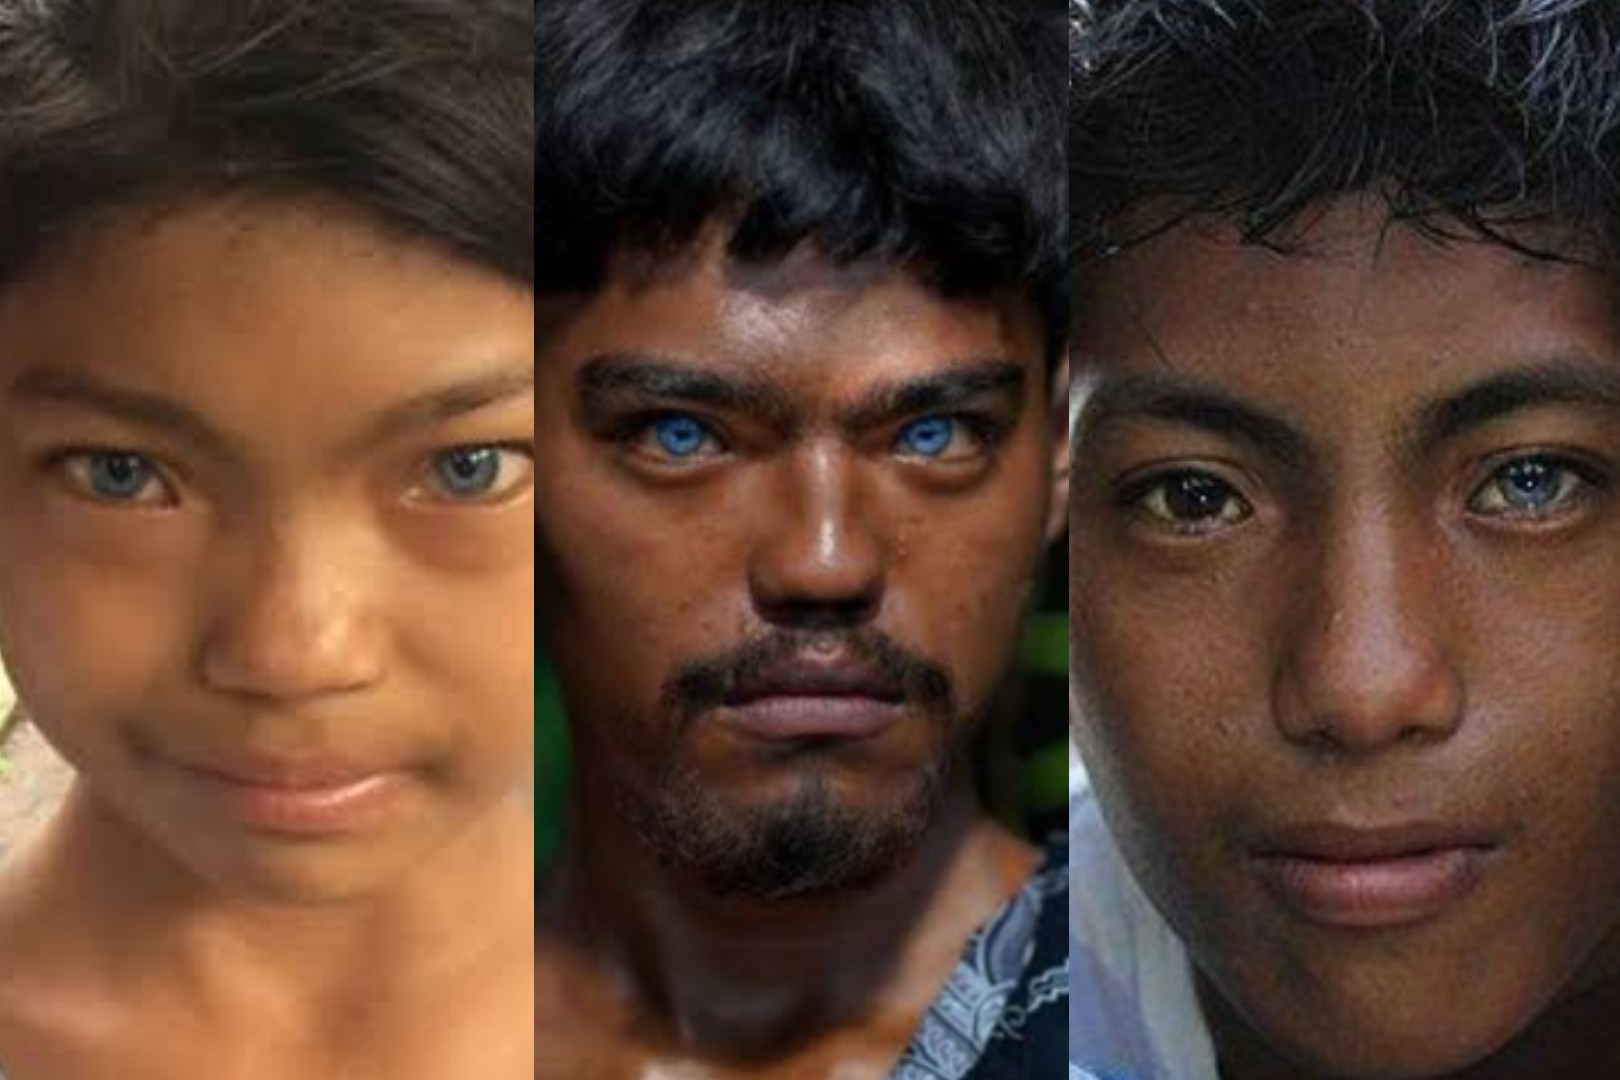 Alasan Tiga Suku Ini Bermata Biru, Sindrom Waardenburg dan Faktor Keturunan